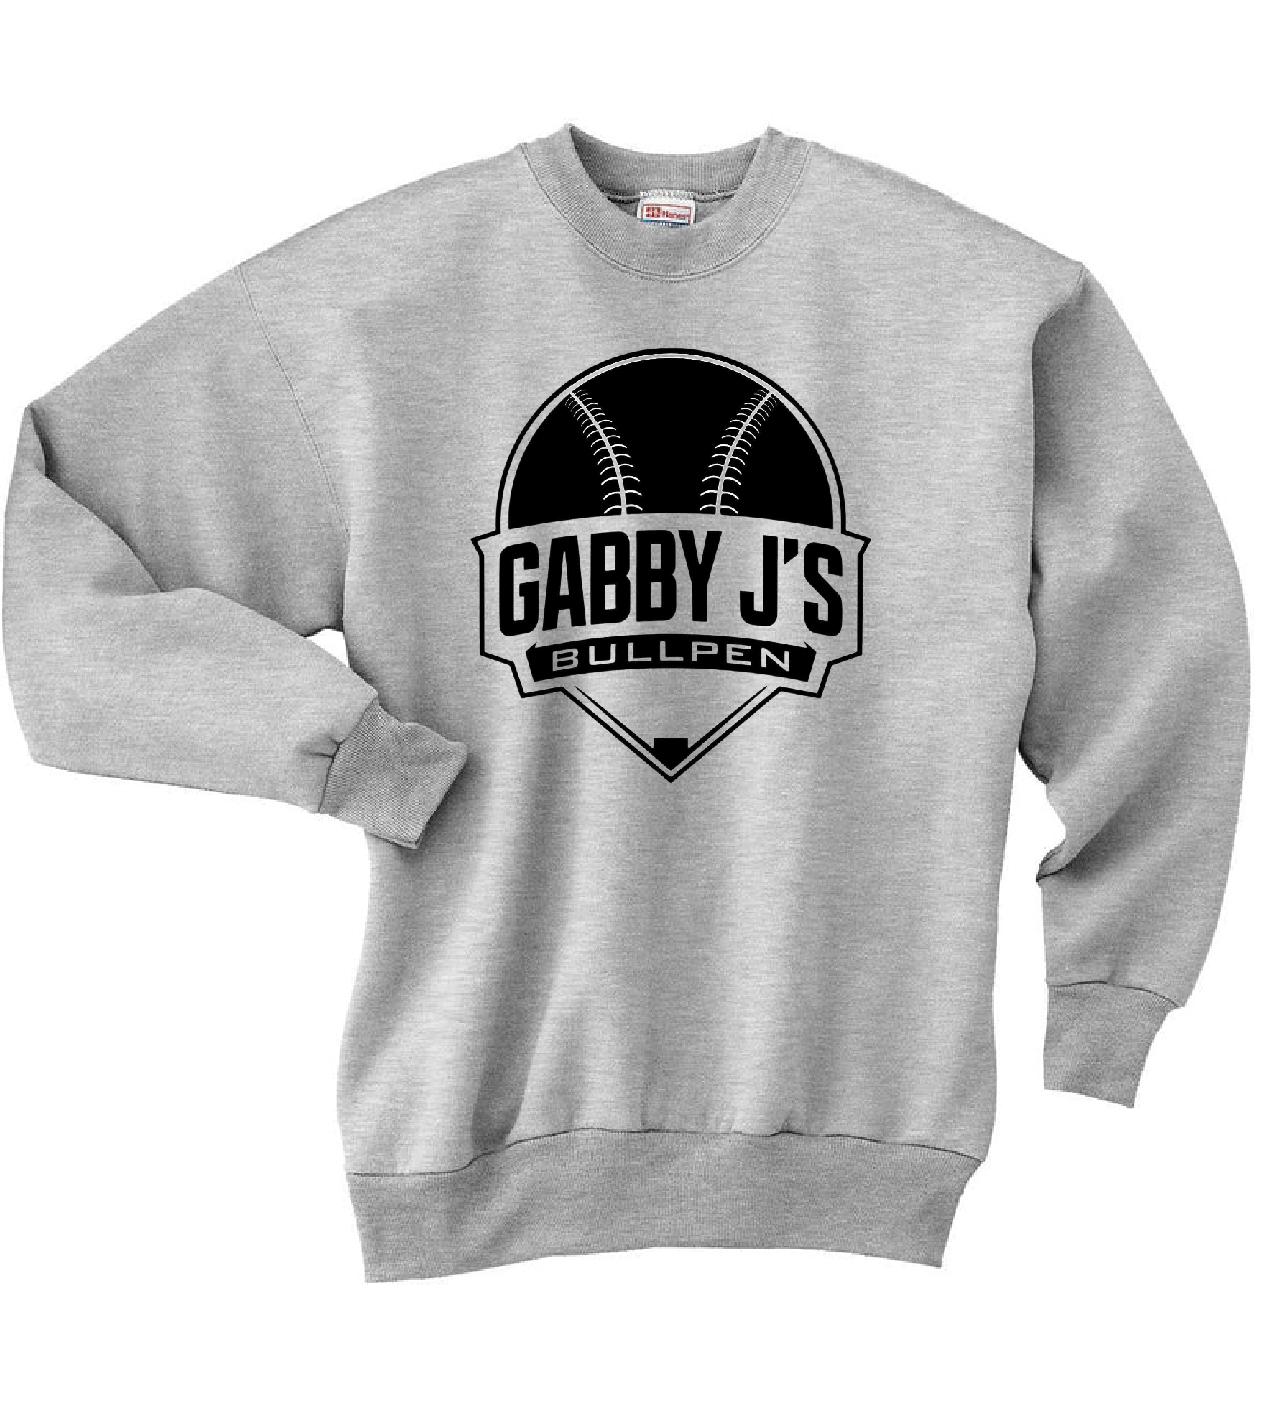 Gabby J’s Bullpen Crewneck Sweatshirt